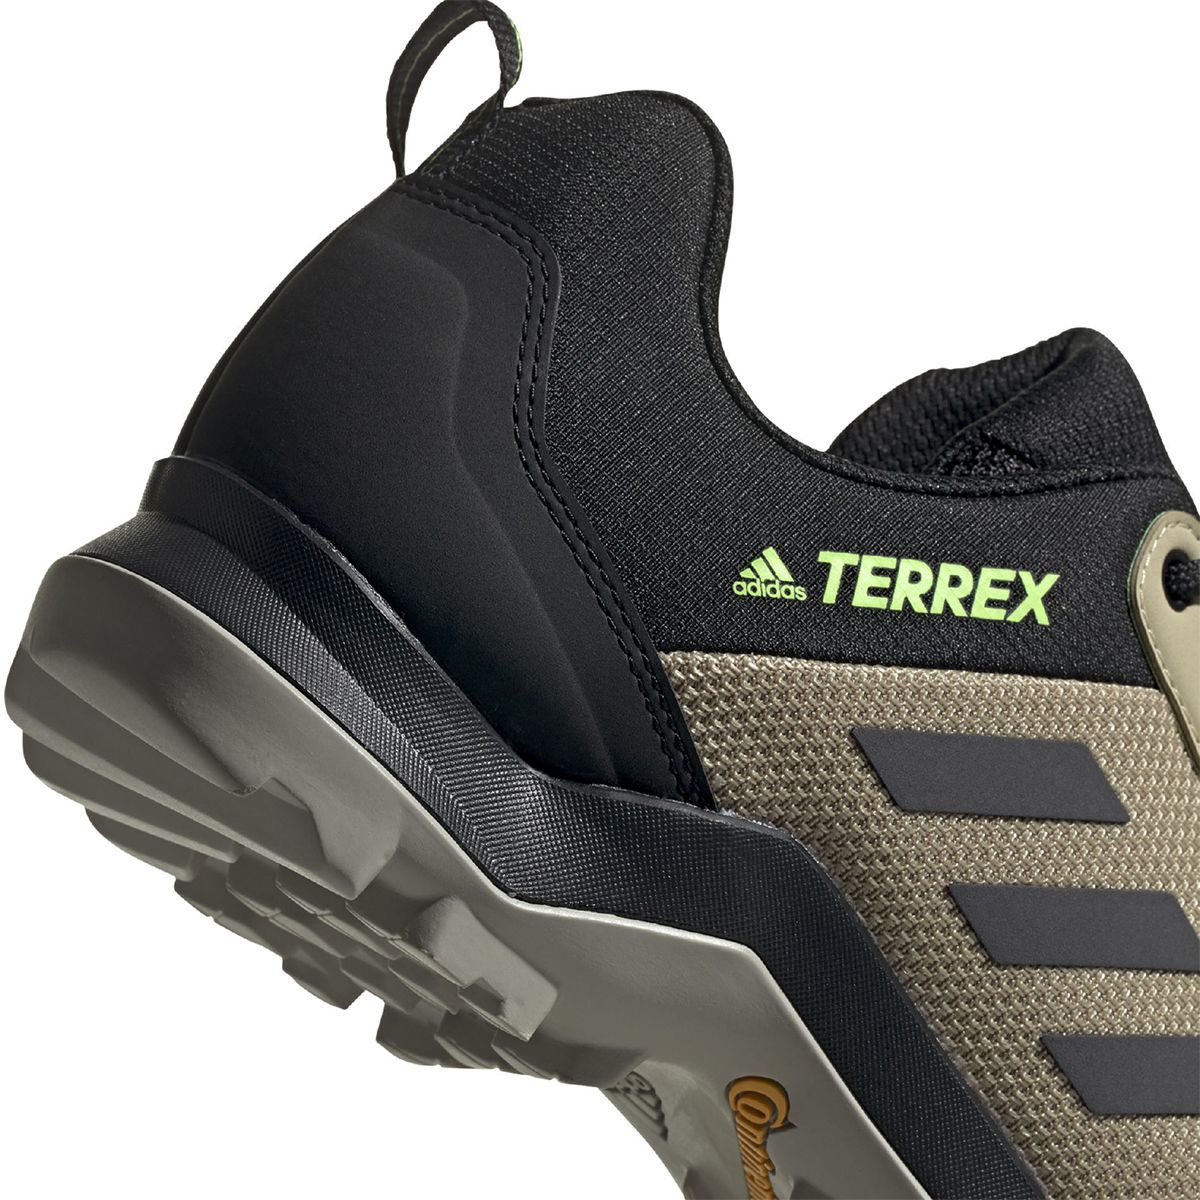 Adidas terrex ax3. Adidas Terrex ax3 GTX. Adidas Terrex ax3 Hiking. Adidas Terrex ax3 Core. Adidas Terrex Trail.